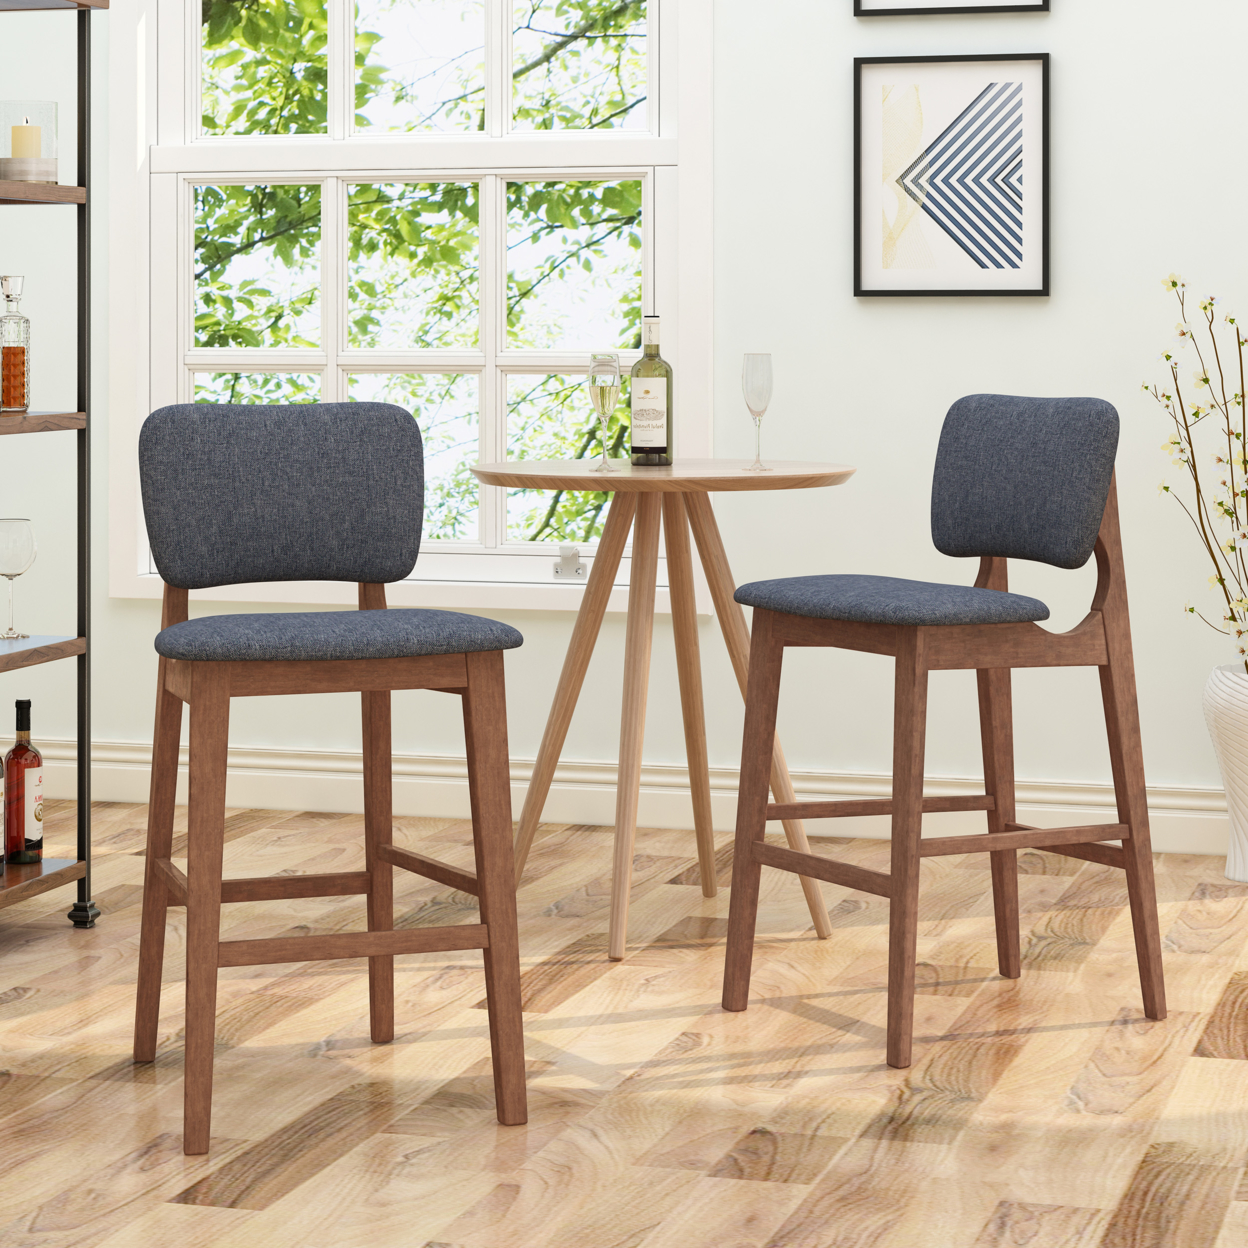 Luella 42 Wooden Bar Chair With Fabric Seats (Set Of 2) - Dark Green + Walnut Finish